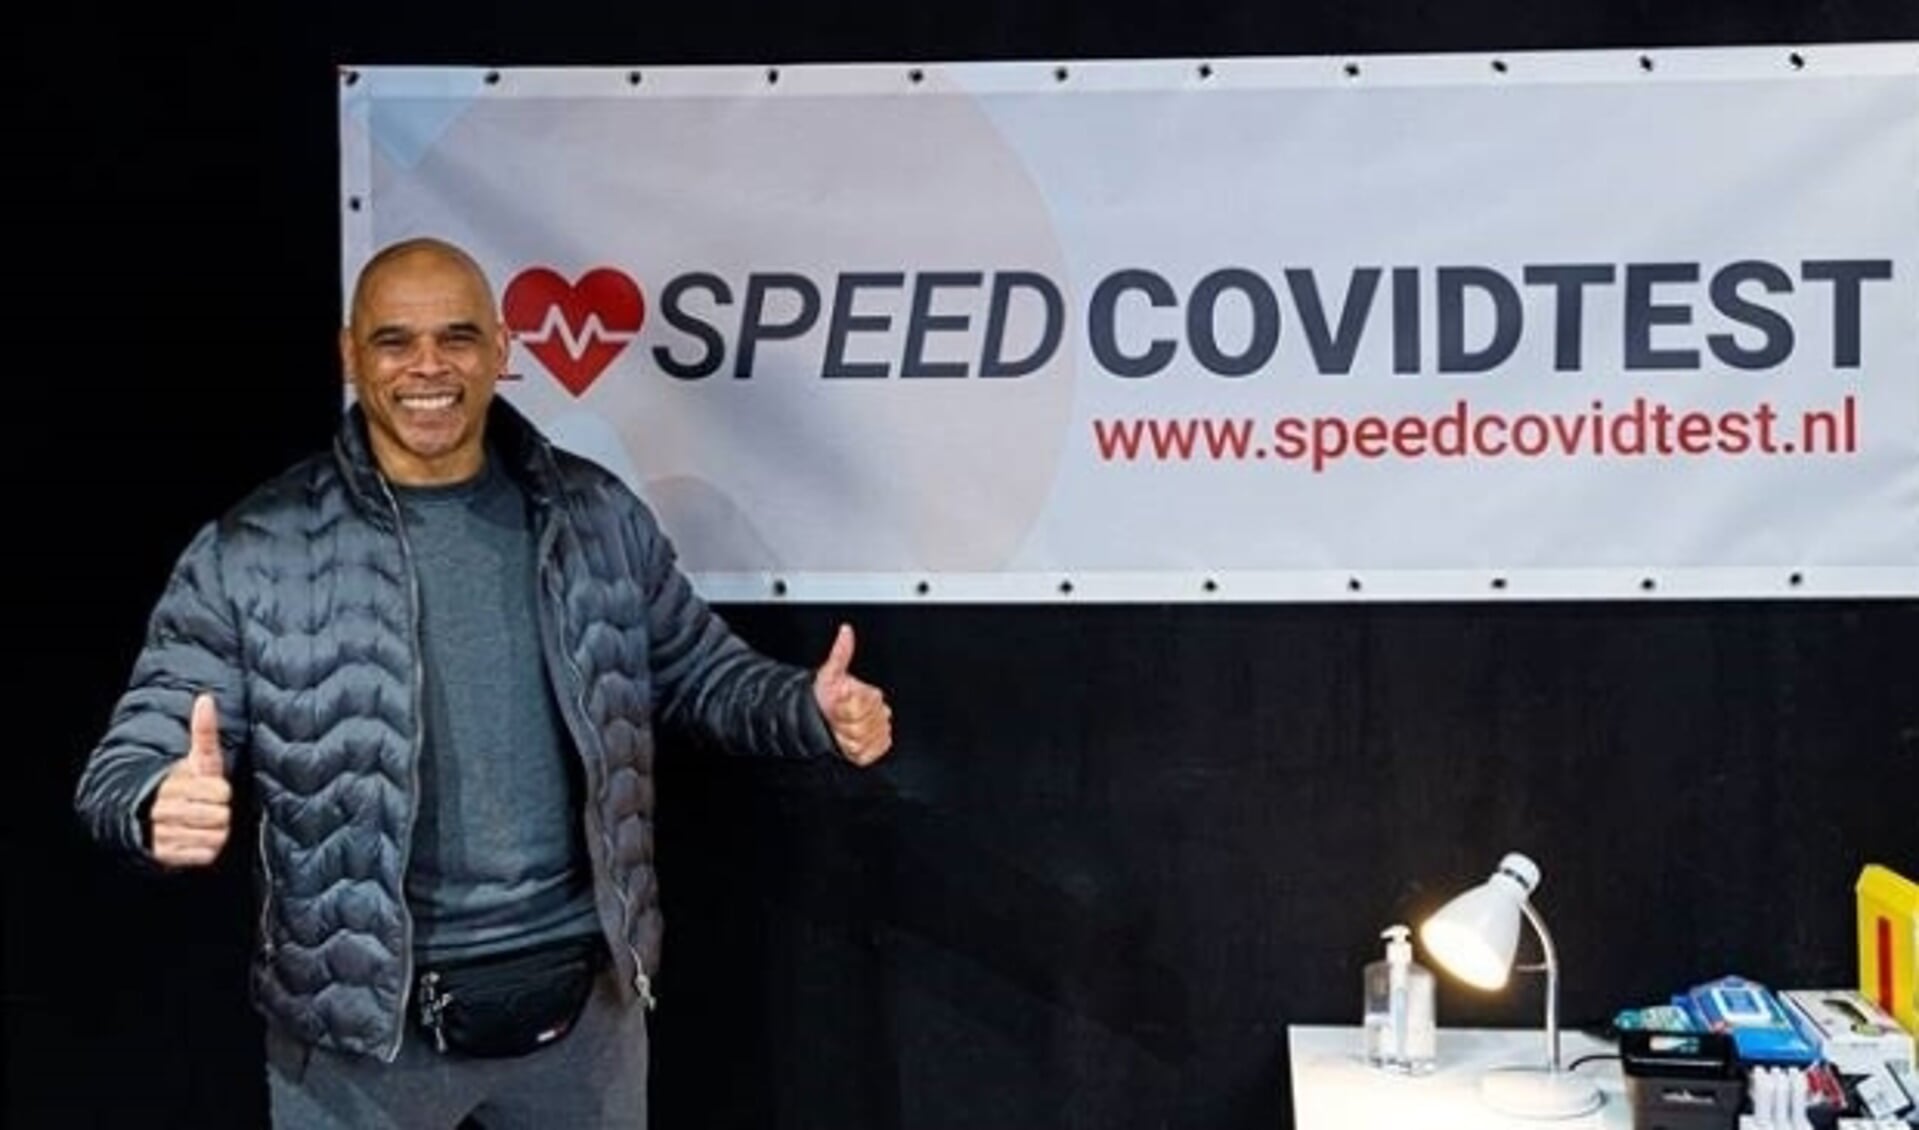 Oud-voetballer Glenn Helder is fan van Speed Covid Test uit Bergschenhoek.